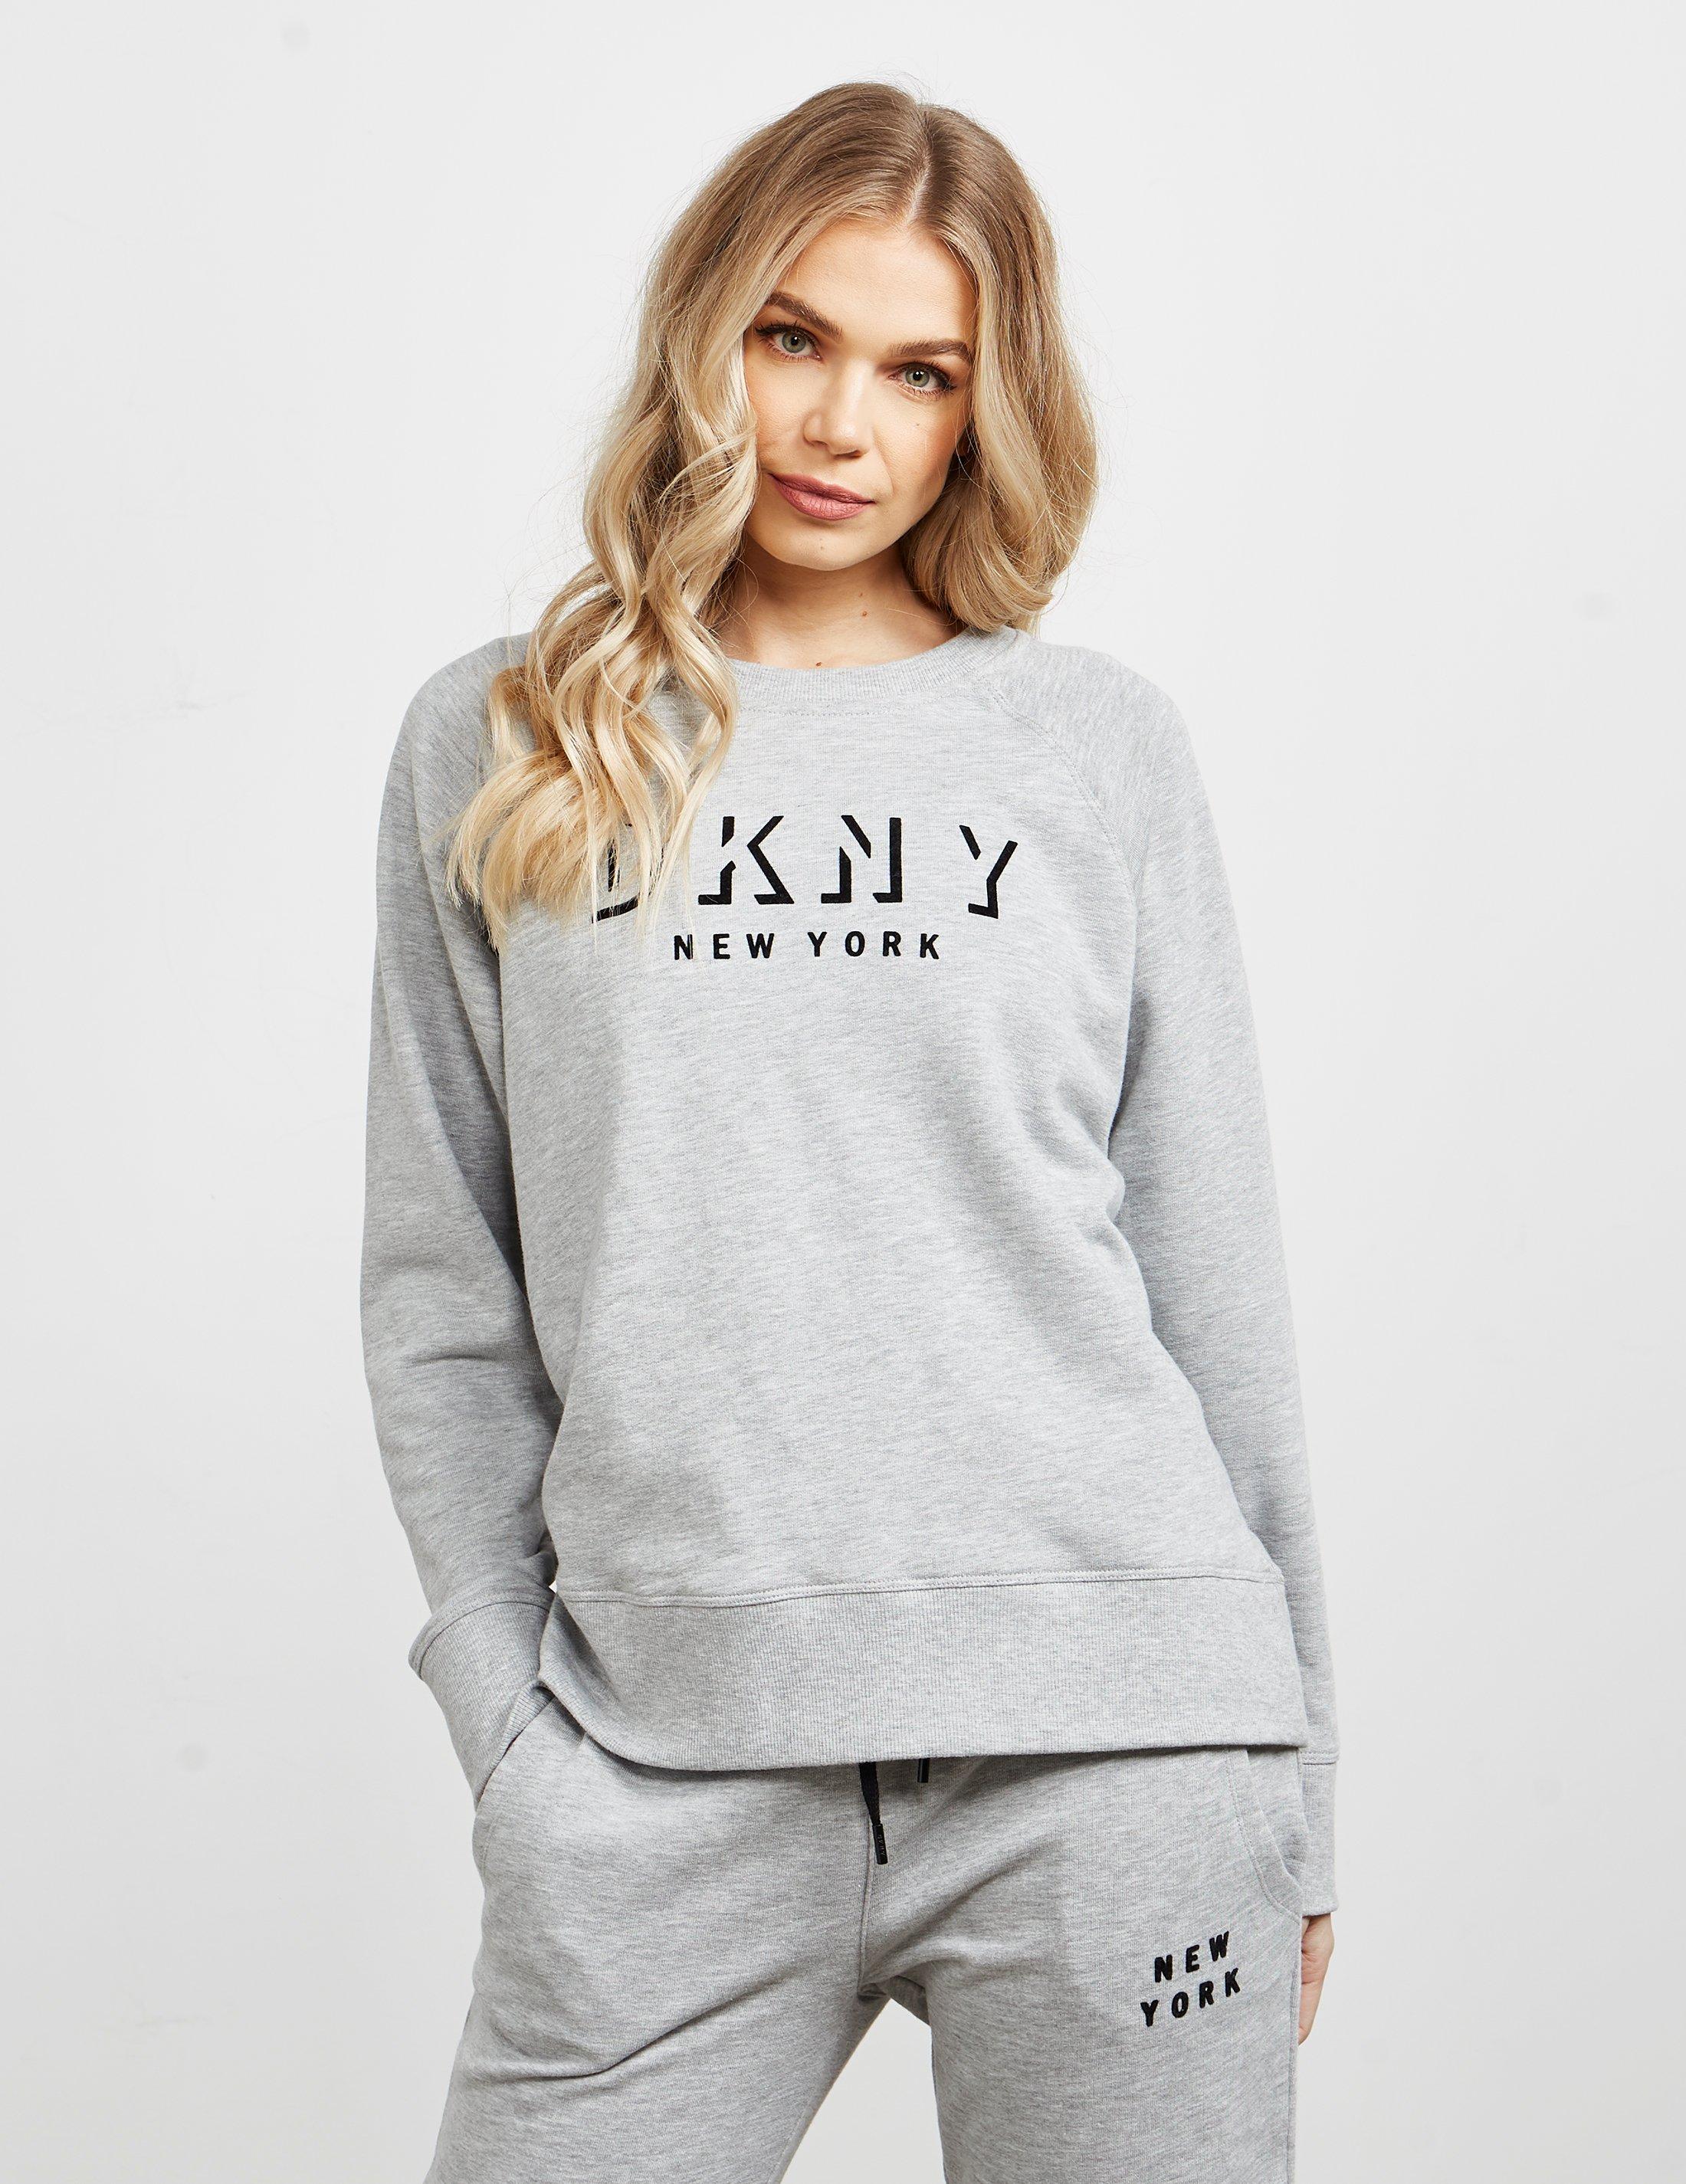 dkny grey sweatshirt